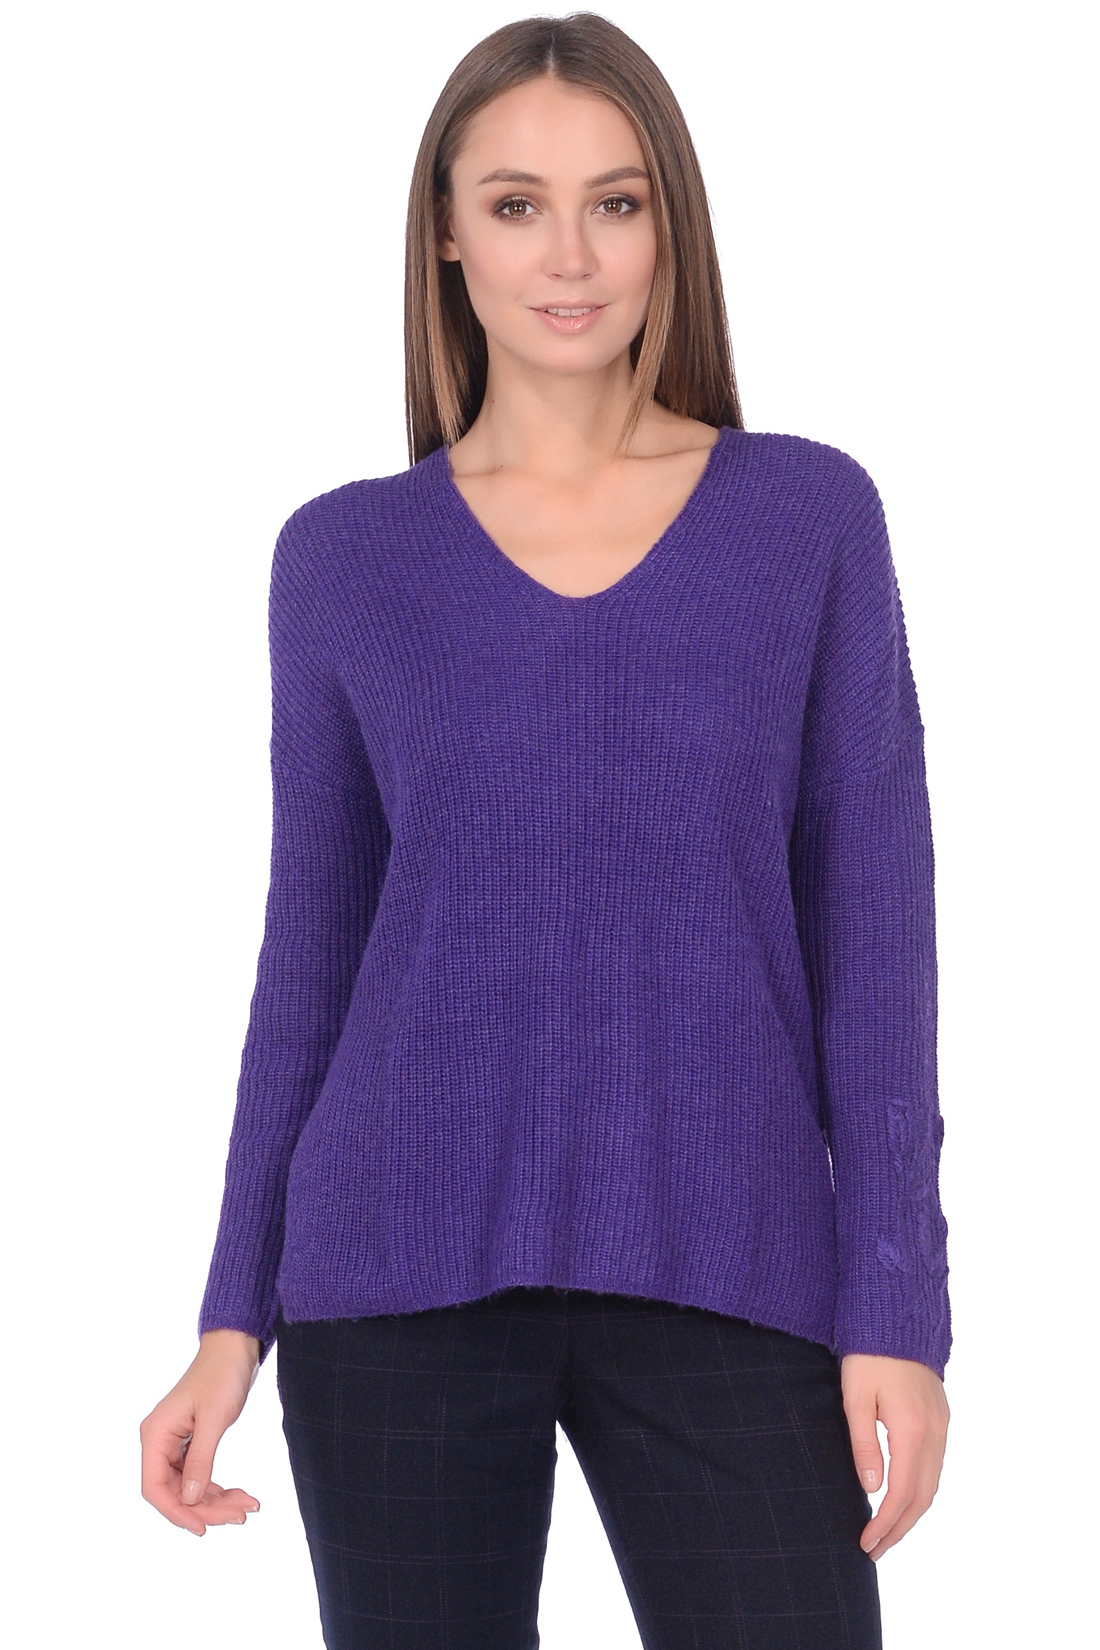 Пуловер с узорами на рукавах (арт. baon B138587), размер L, цвет фиолетовый Пуловер с узорами на рукавах (арт. baon B138587) - фото 1